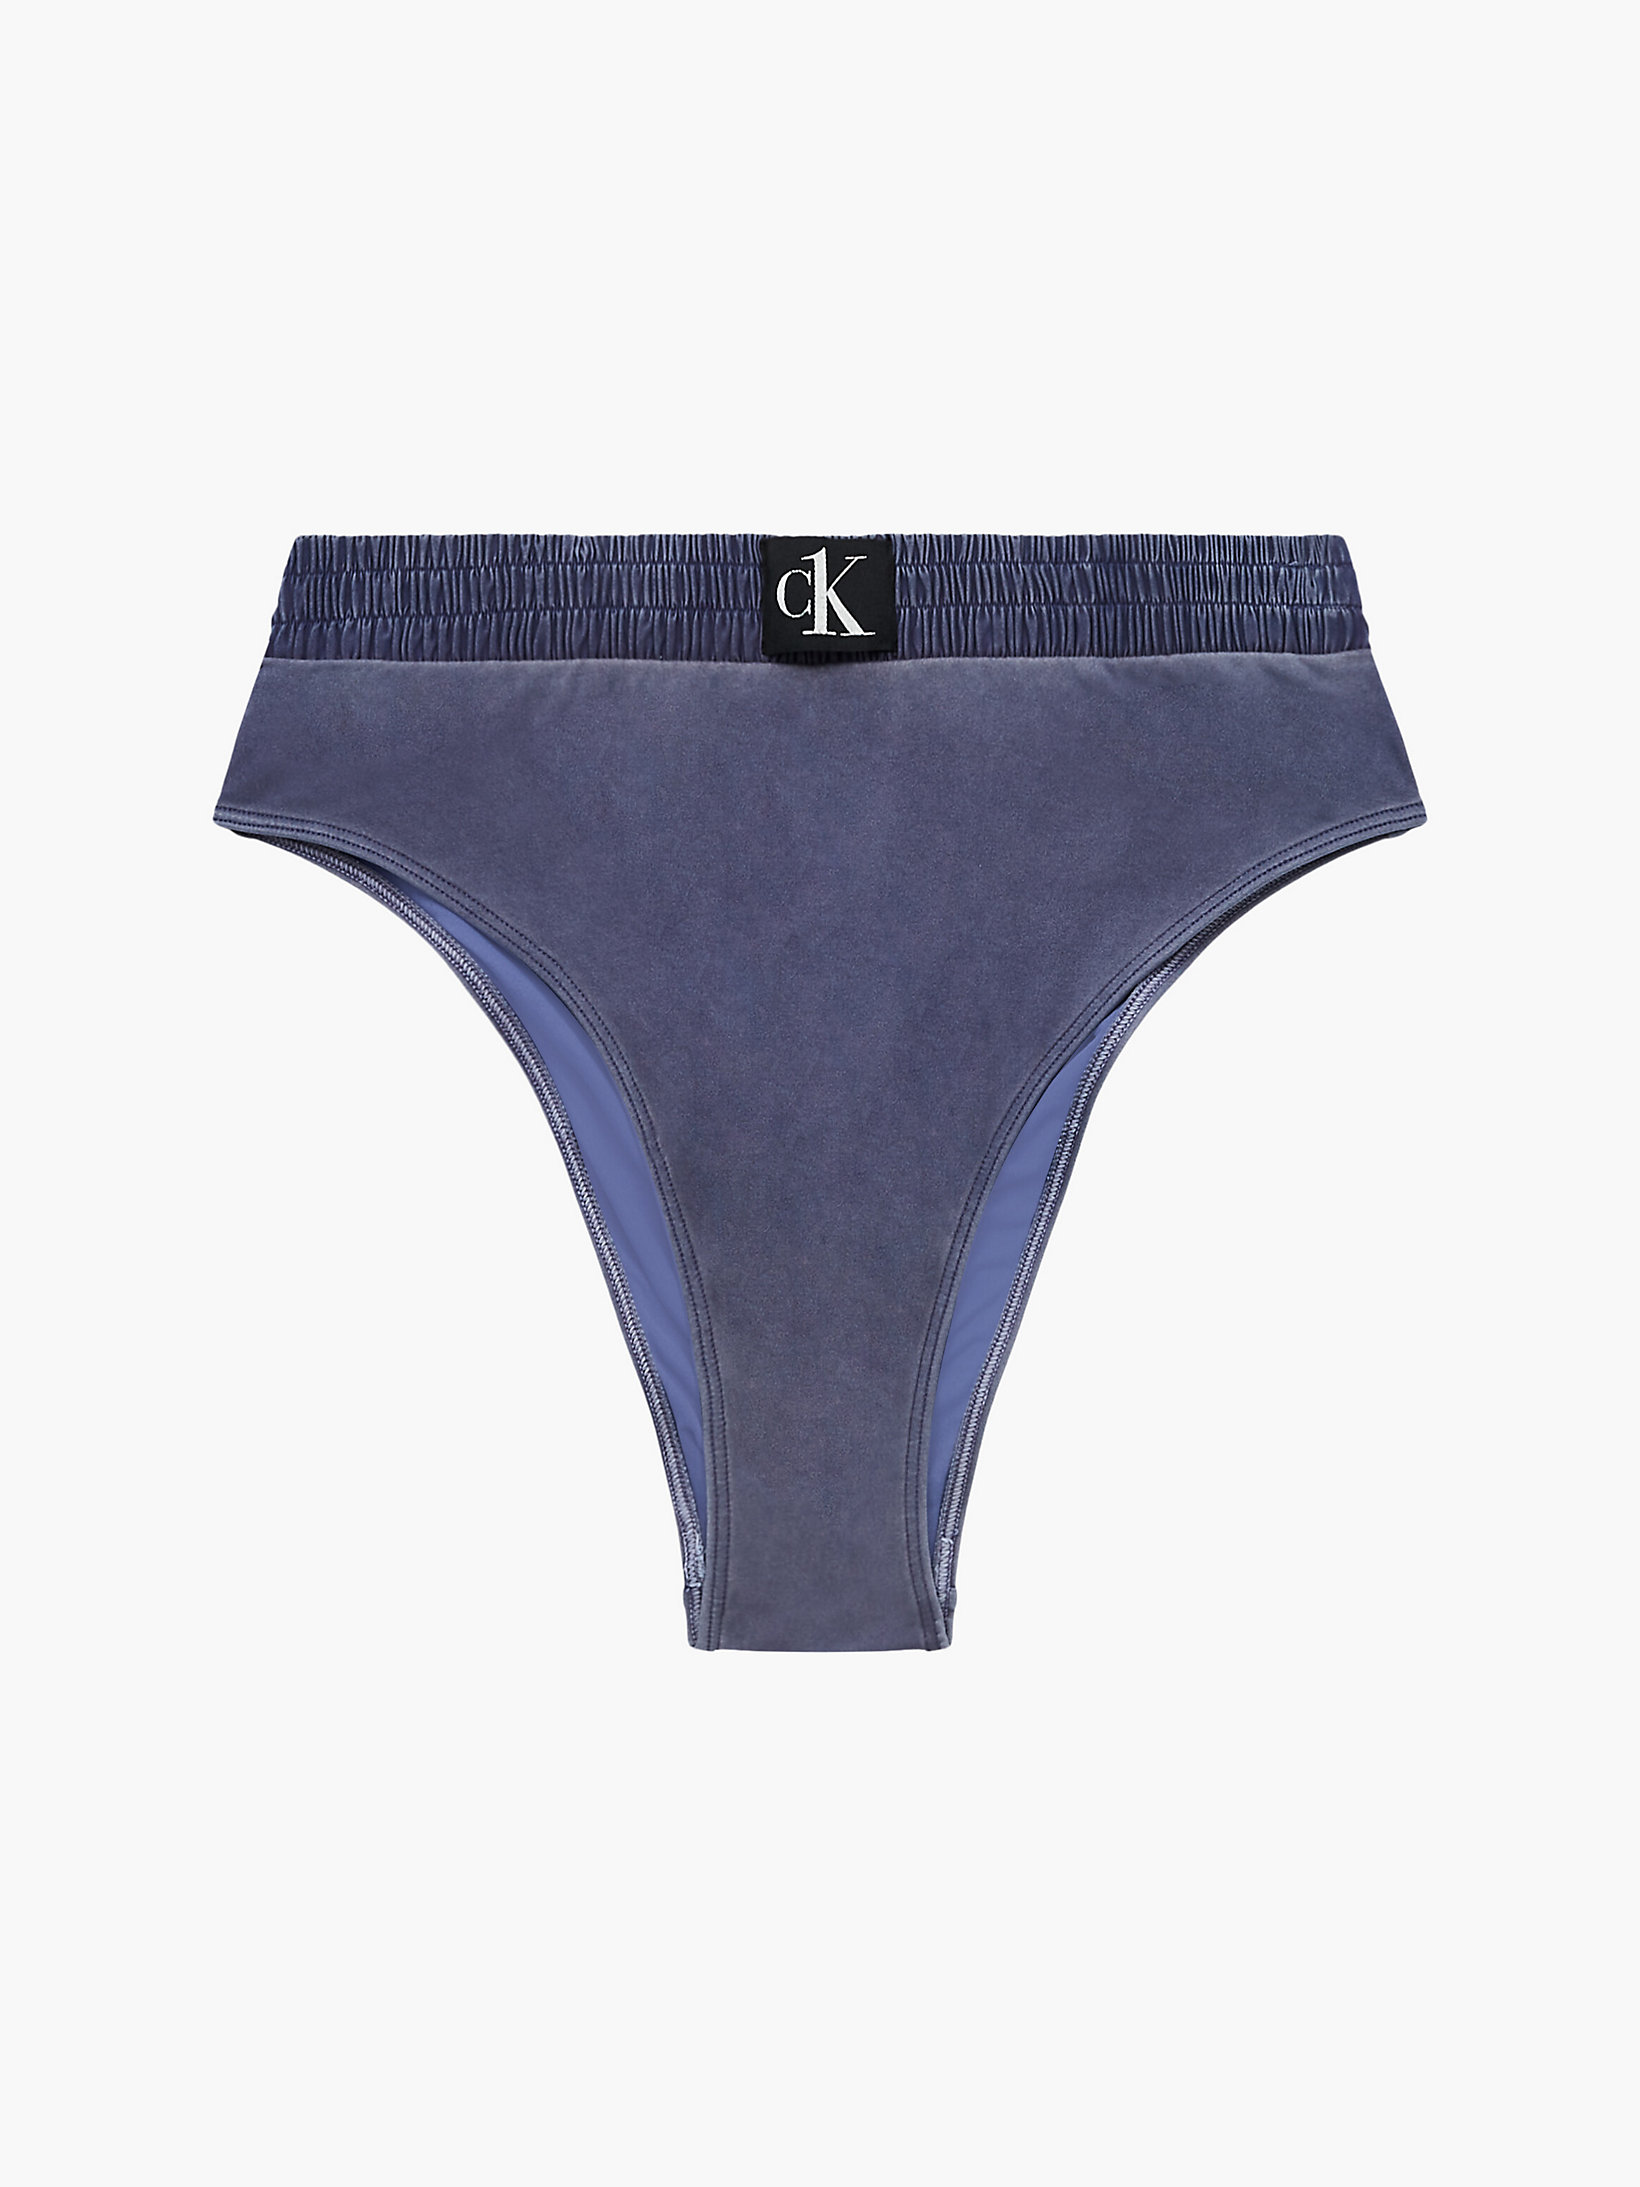 Washed Indigo High Waisted Bikini Bottom - CK Authentic undefined women Calvin Klein